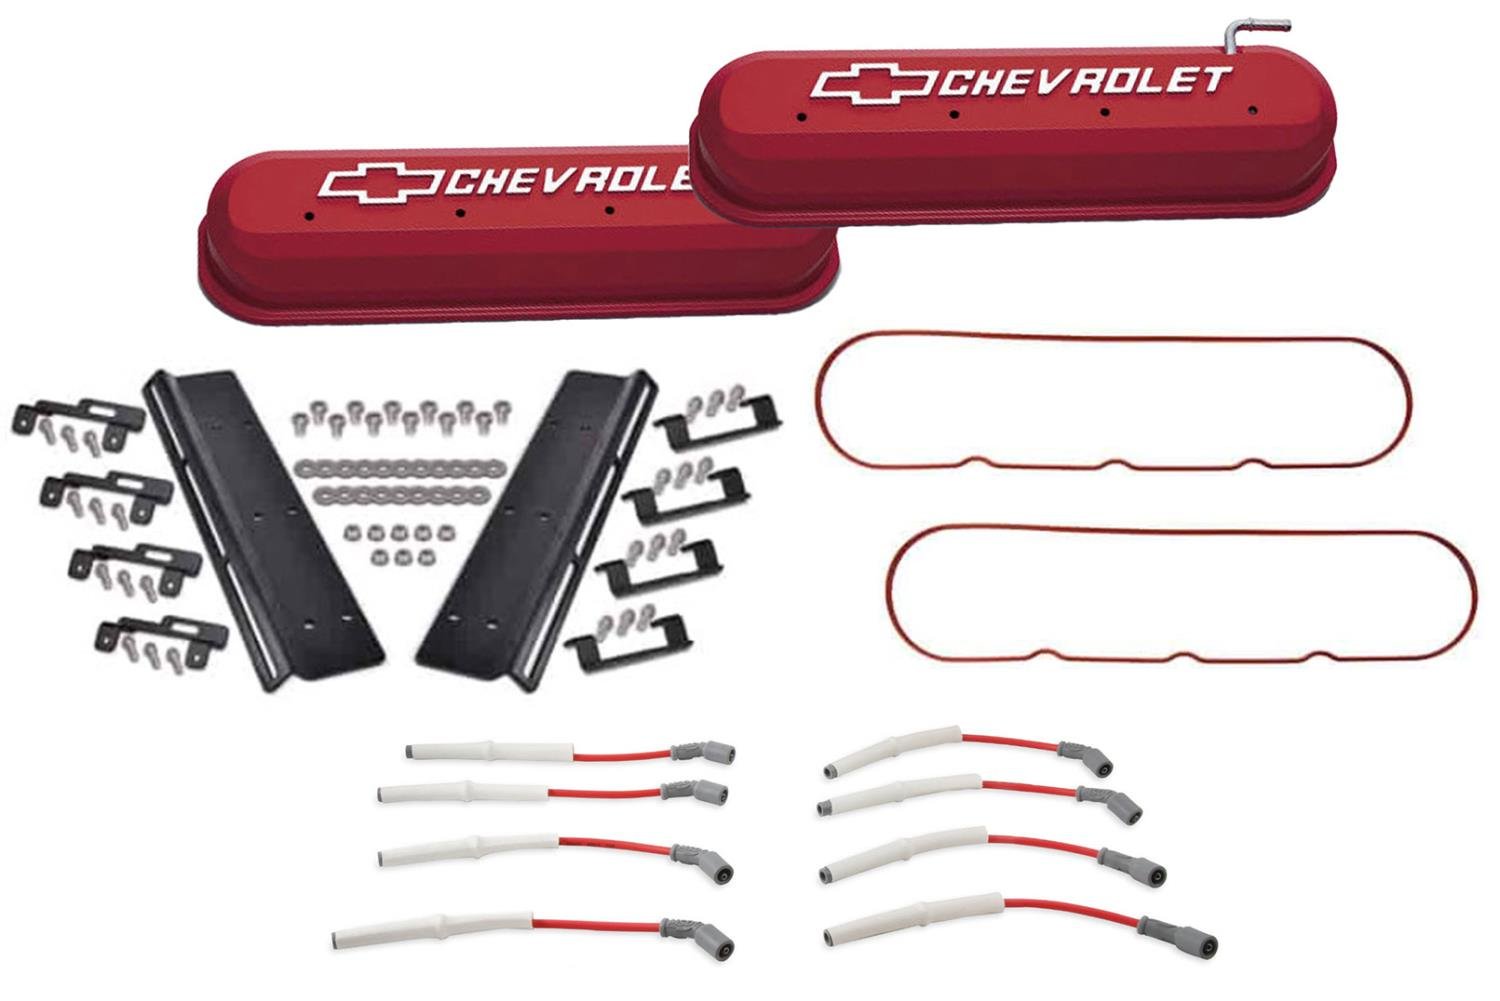 141-267 Die-Cast Slant-Edge Valve Cover Kit for GM Gen III/IV LS Engines w/Raised Chevrolet Logo for LS3/LS7 Coils [Red]